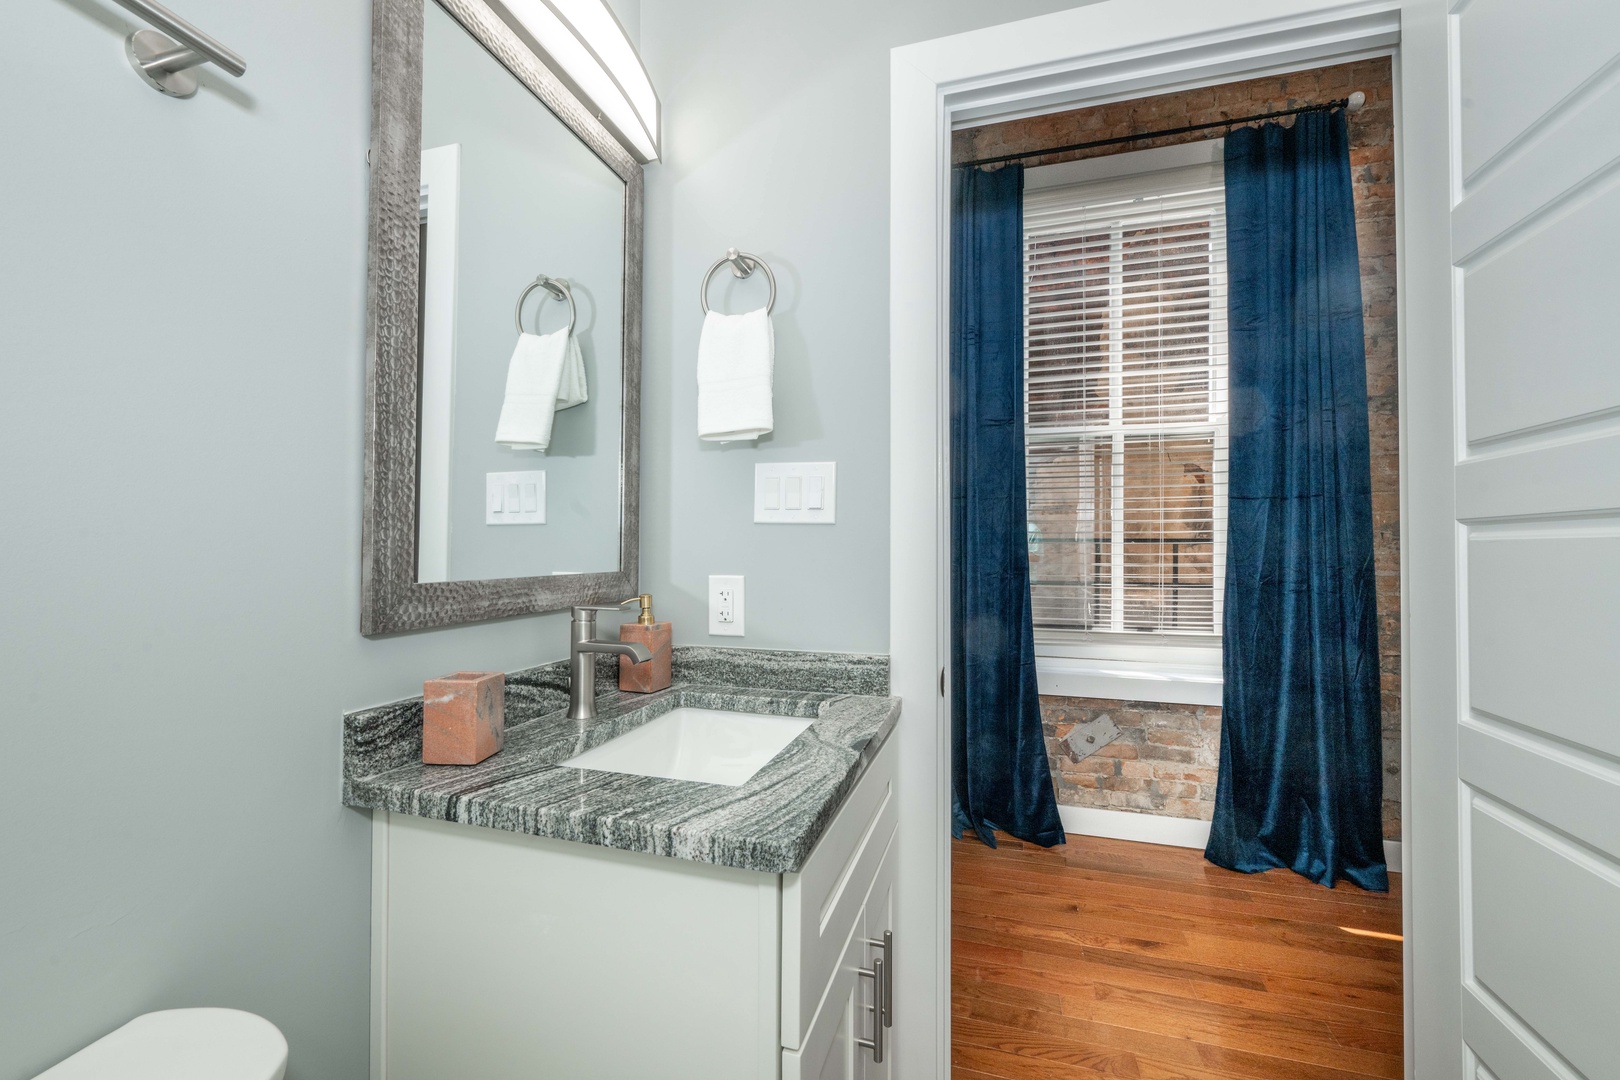 The sleek full bathroom offers a single vanity & shower/tub combo